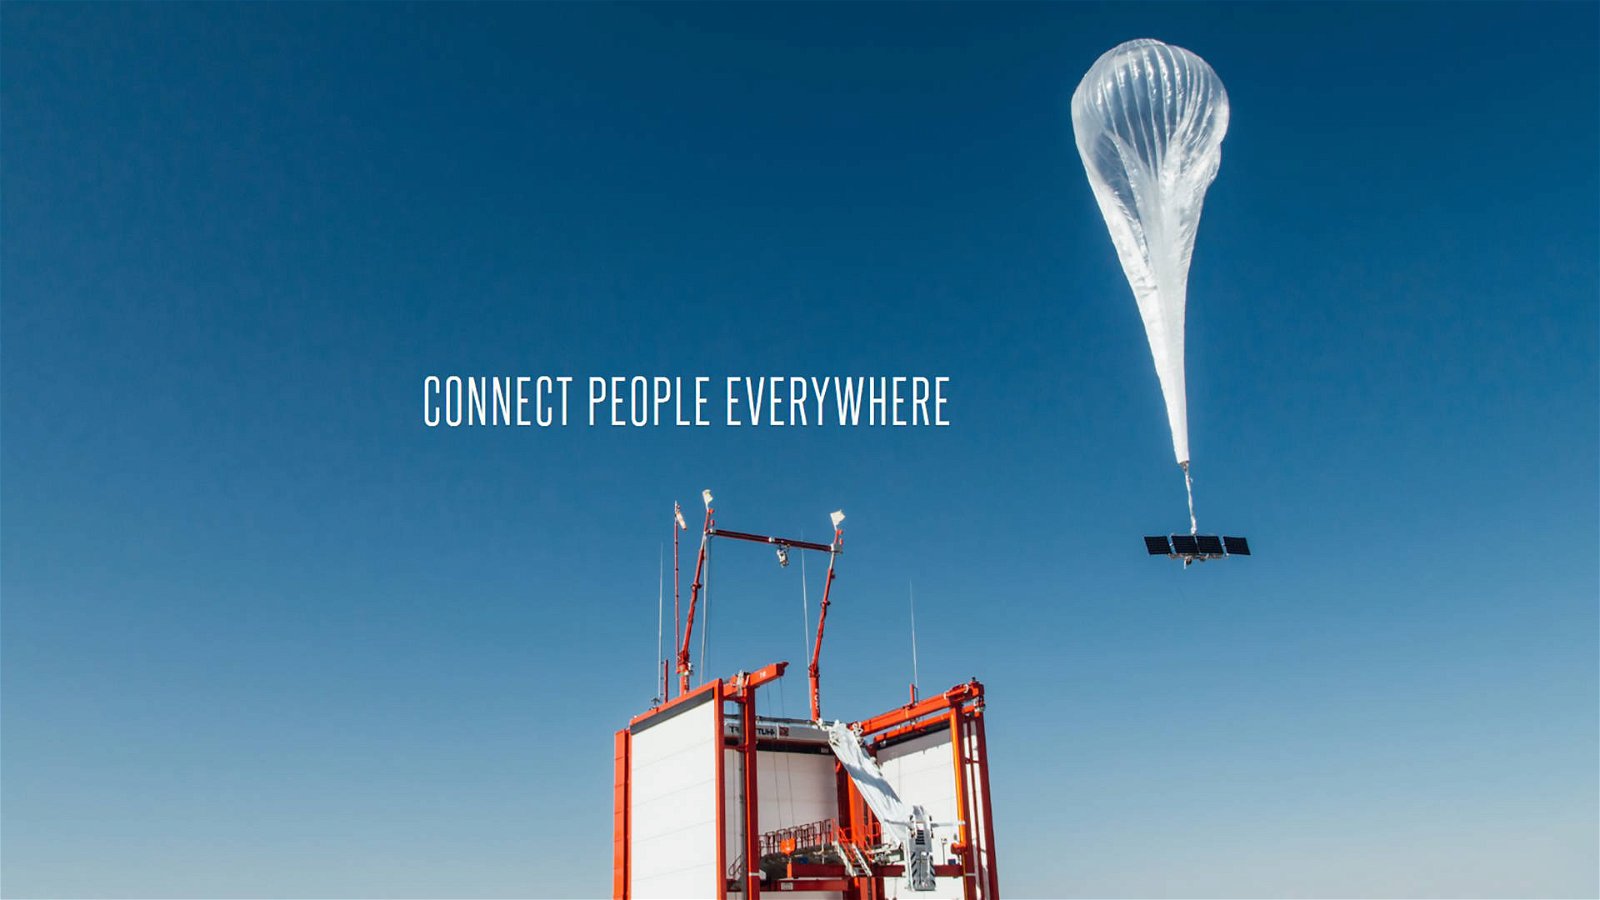 Immagine di Google Project Loon arriva in Kenya, dal 2019 Internet per tutti coi palloni aerostatici